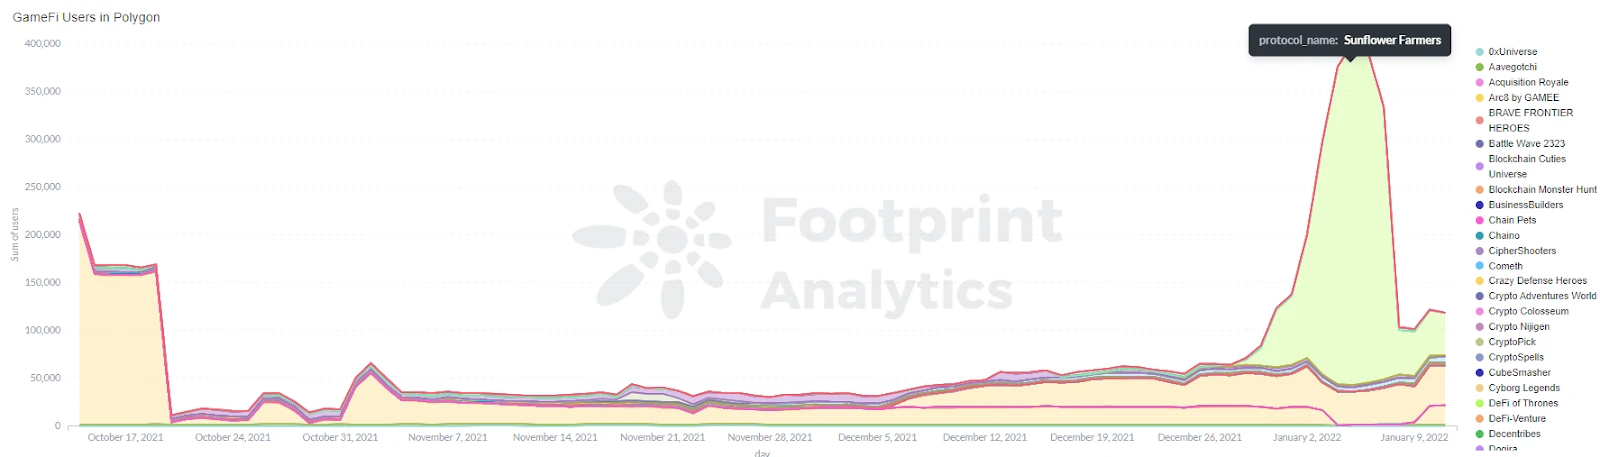 Footprint Analytics：GameFi还能成为Polygon的增长动力吗？